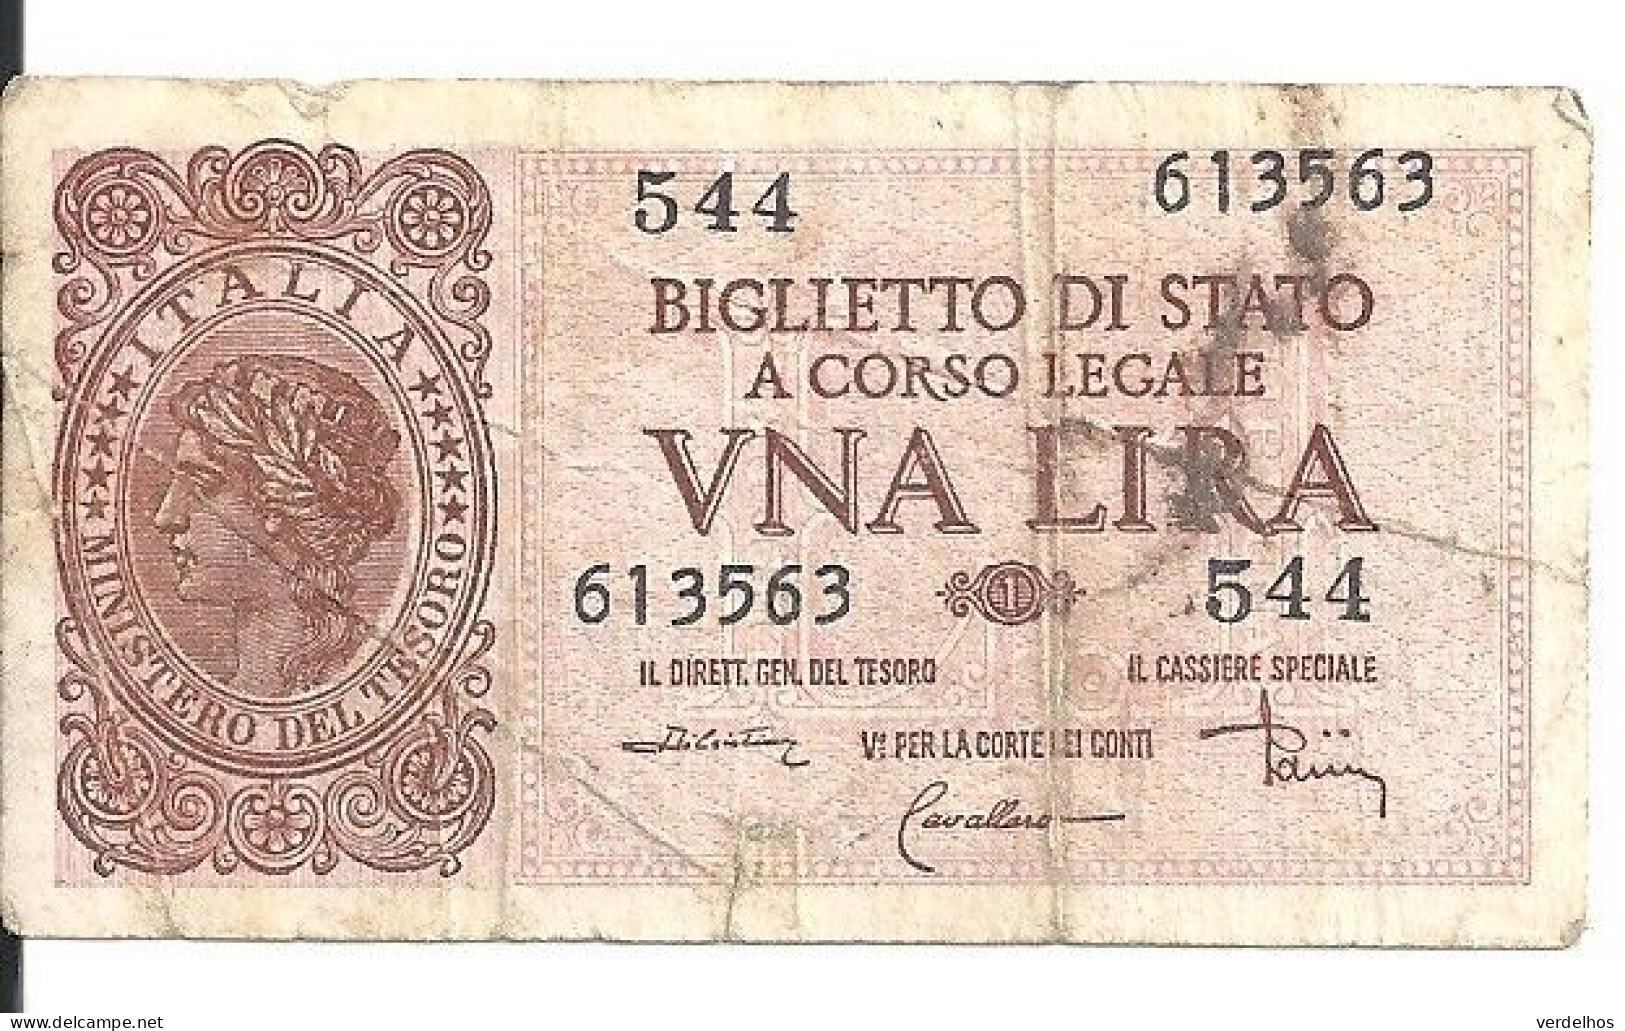 ITALIE 1 LIRE 1944 VG+ P 29 C - Regno D'Italia – 1 Lire